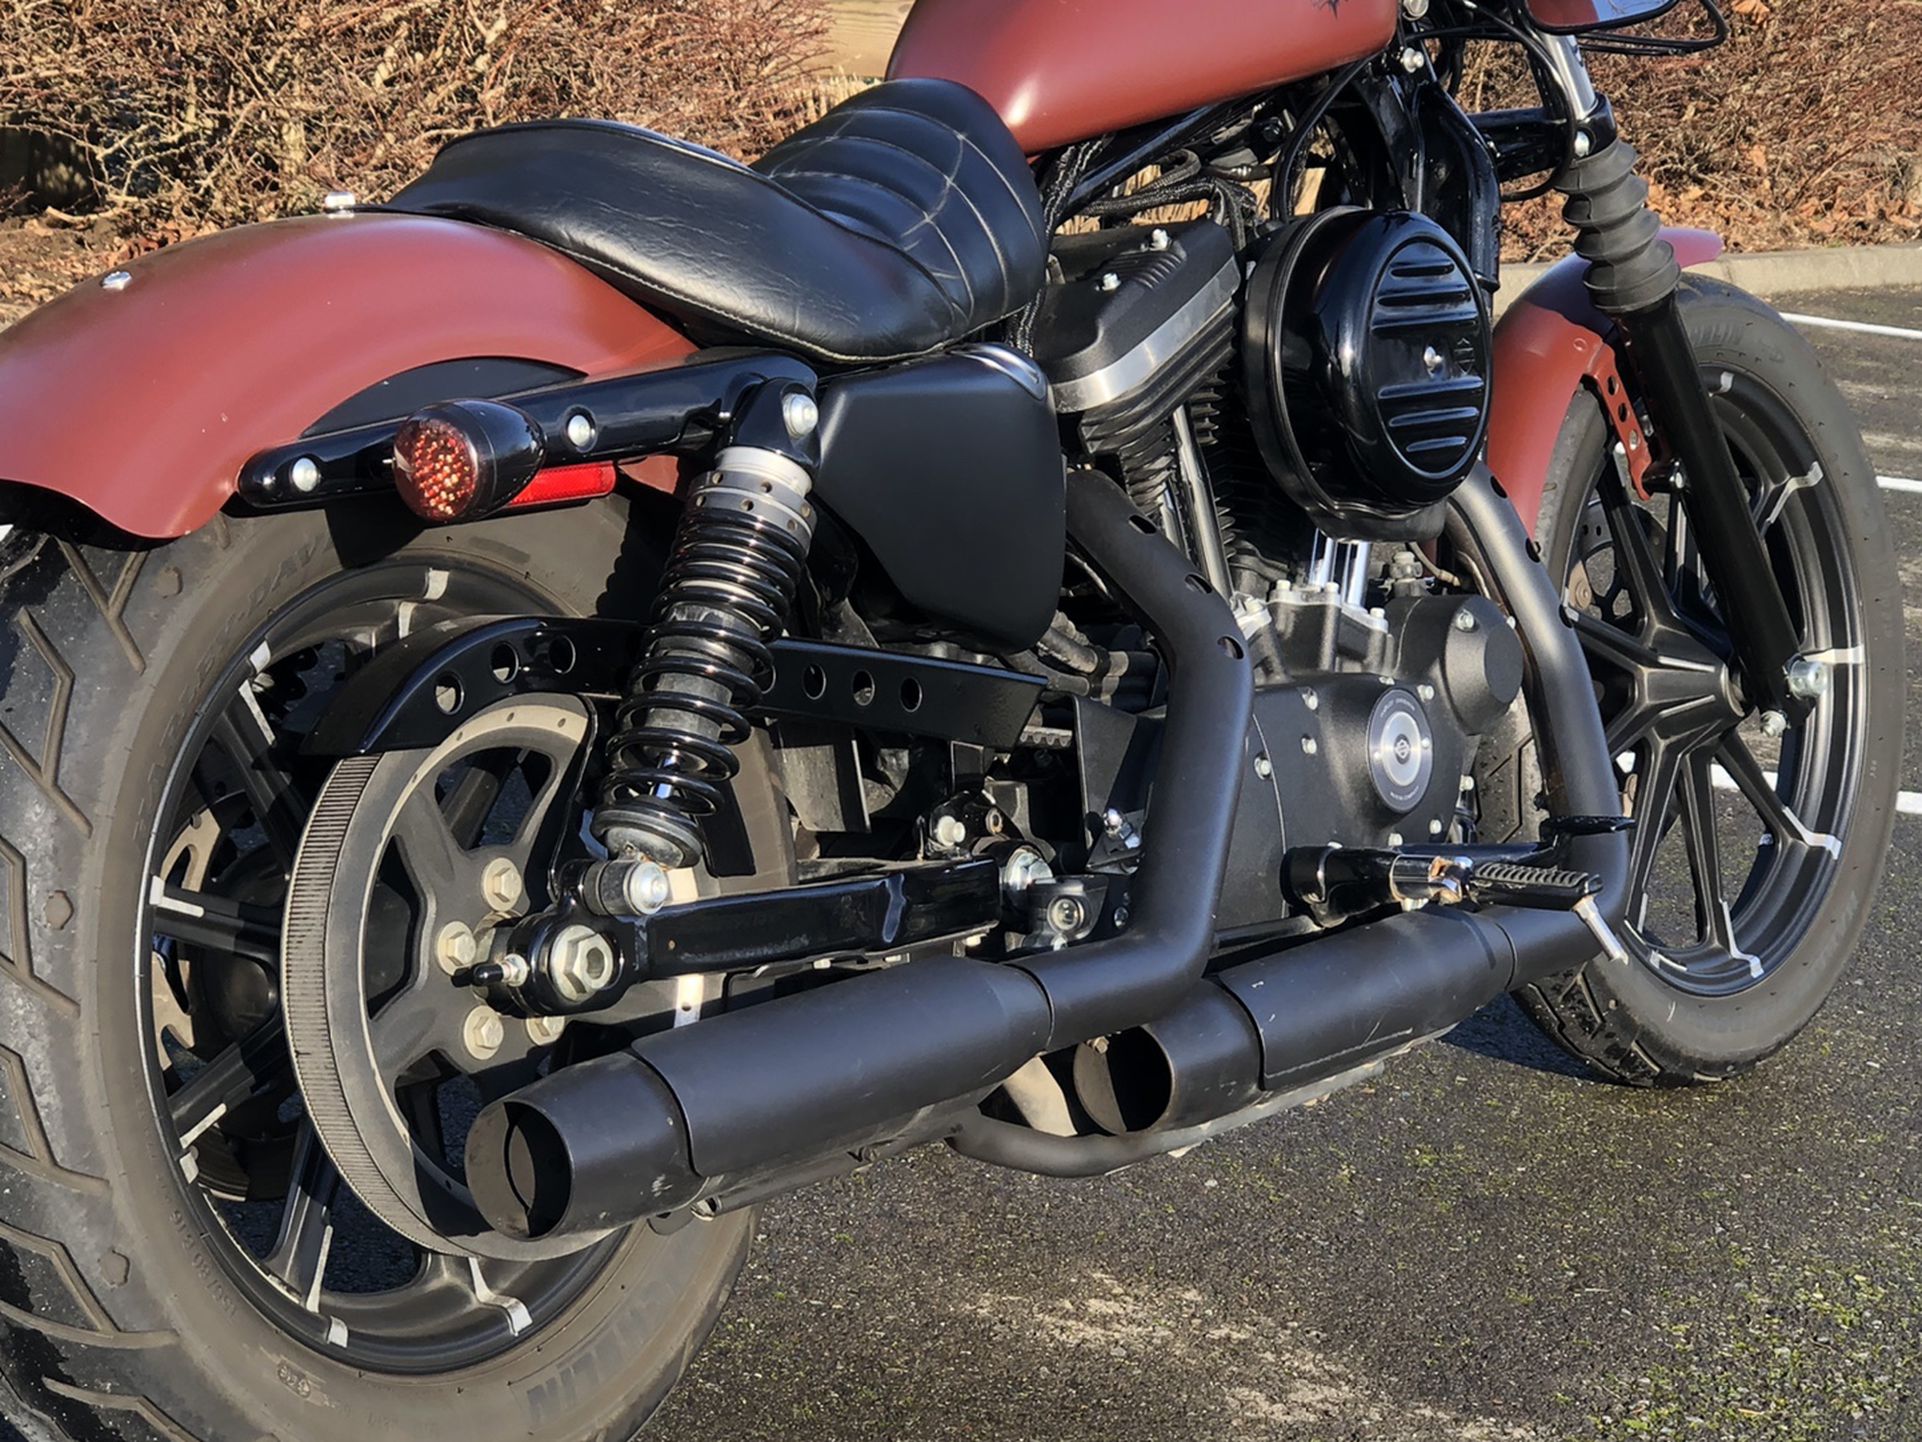 2017 Harley Davidson Sportster 883